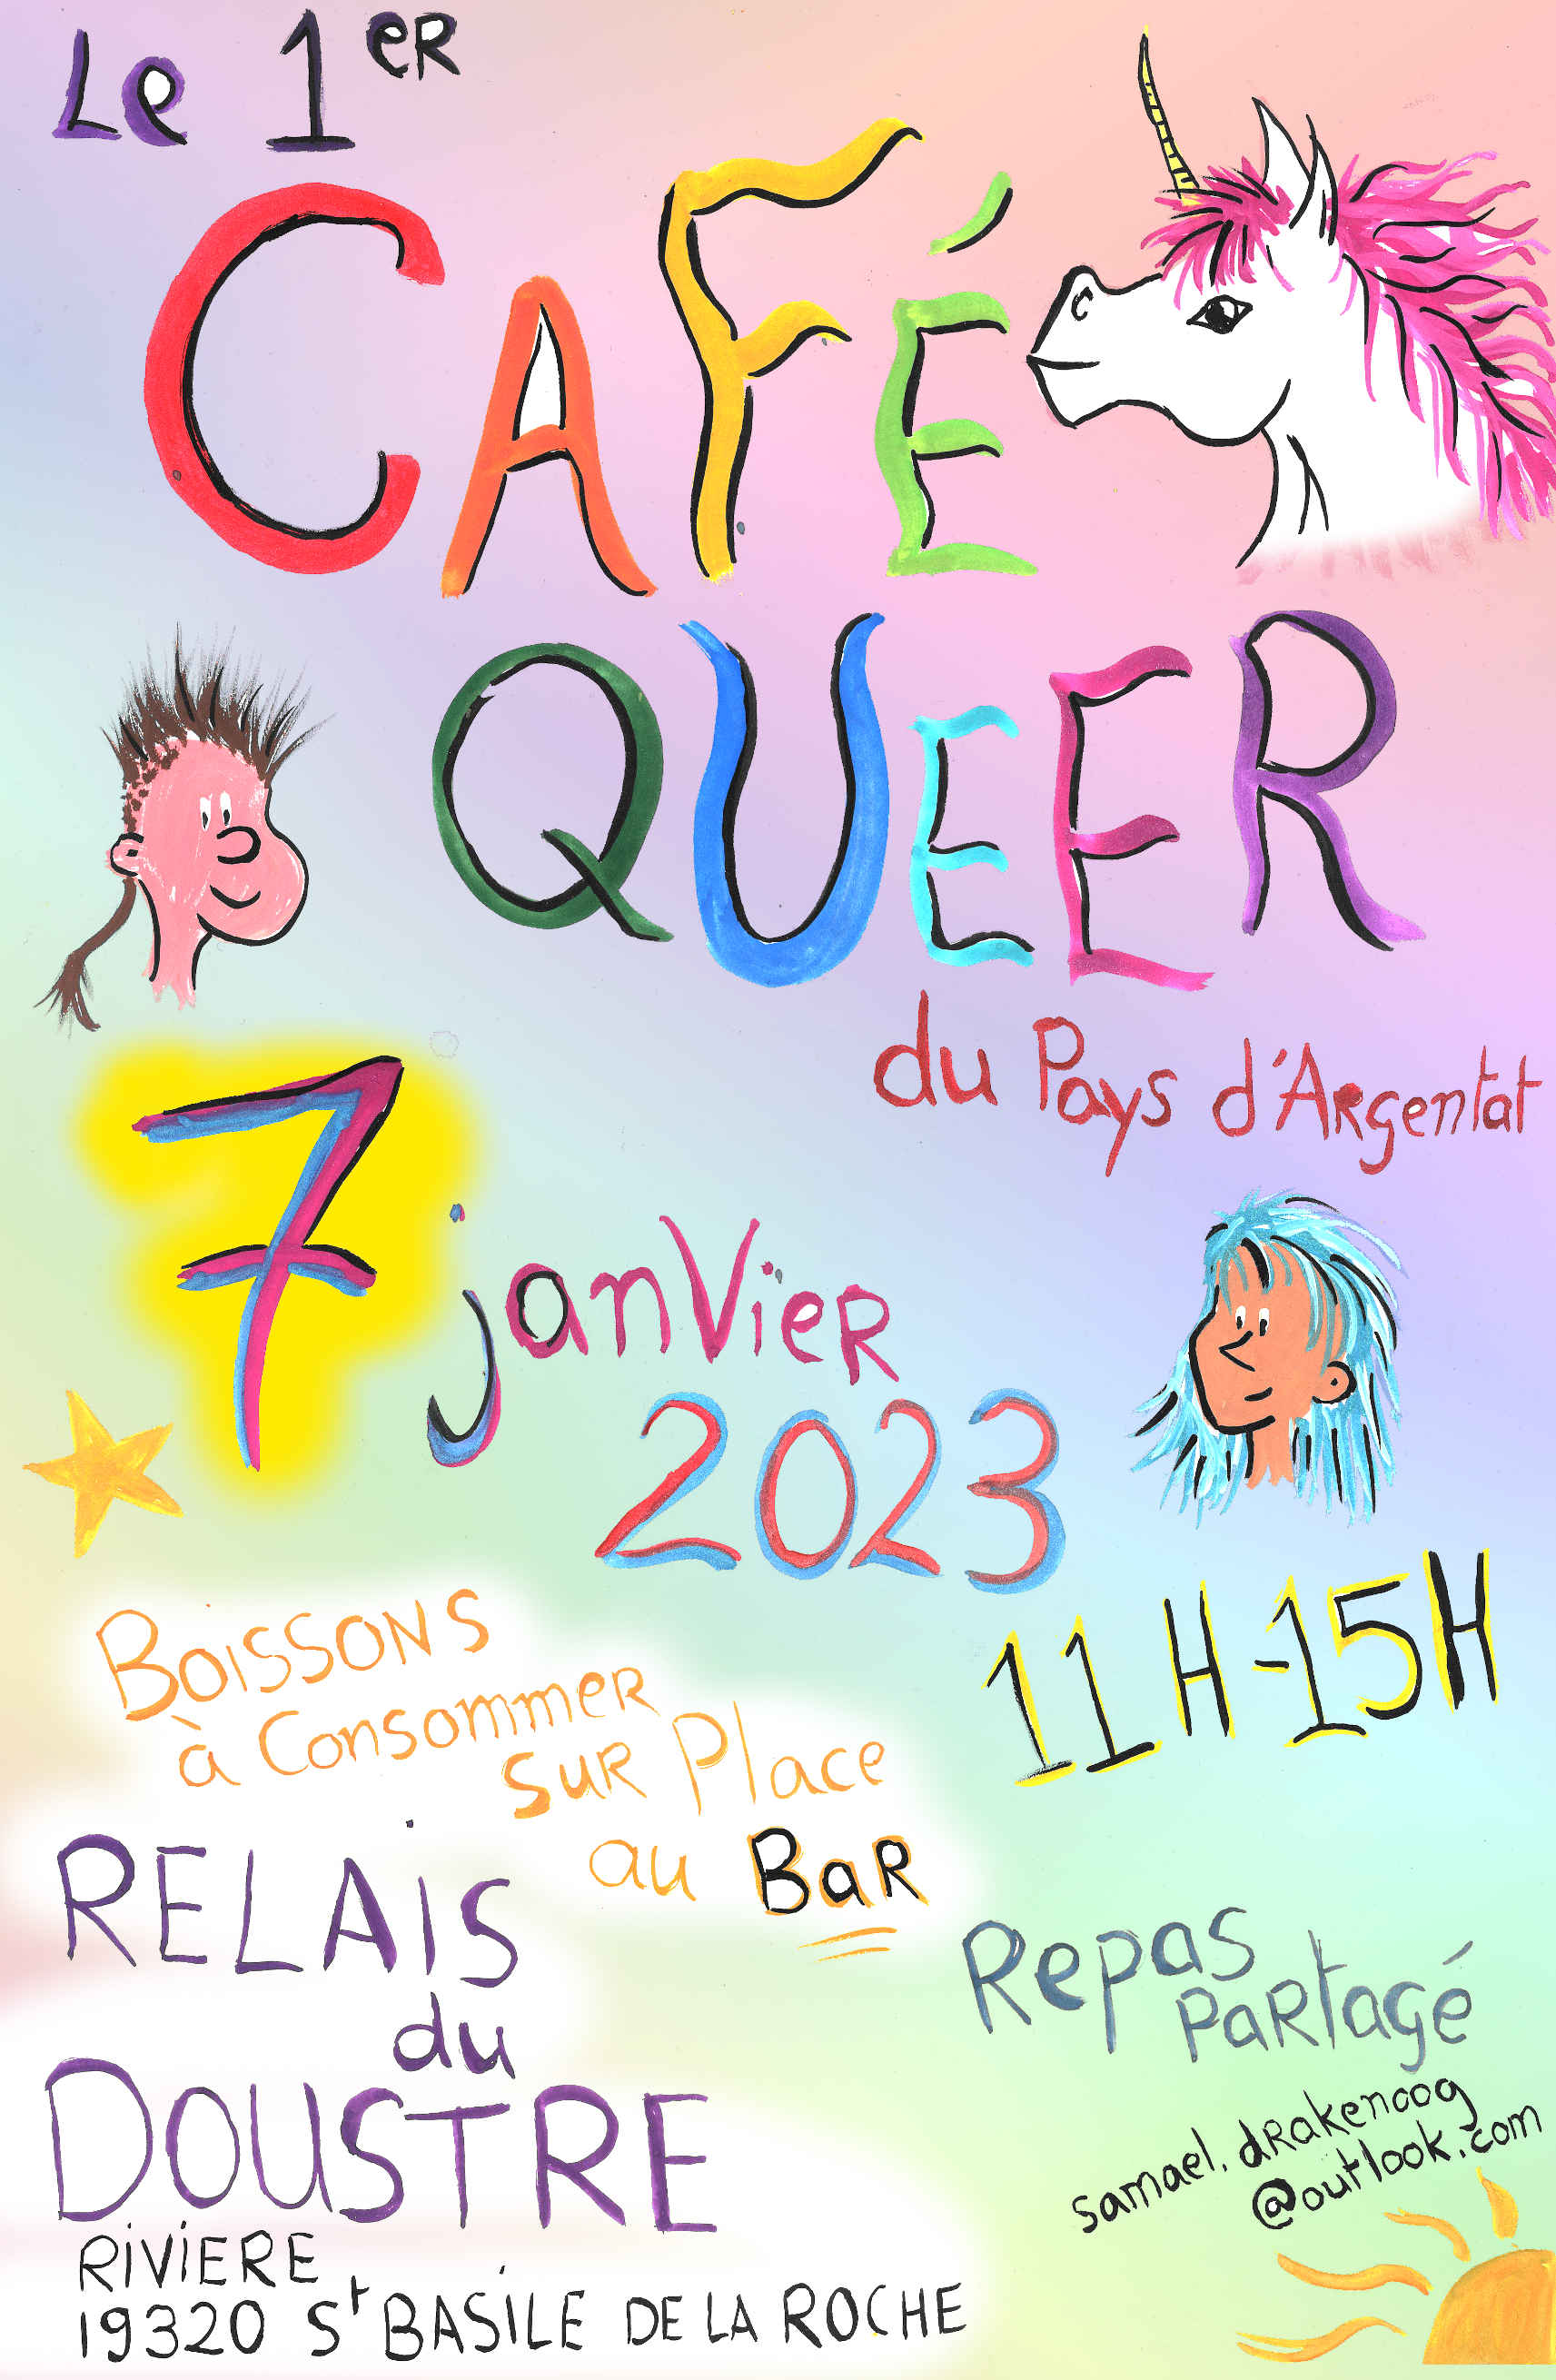 Café Queer 2023 janvier.jpg